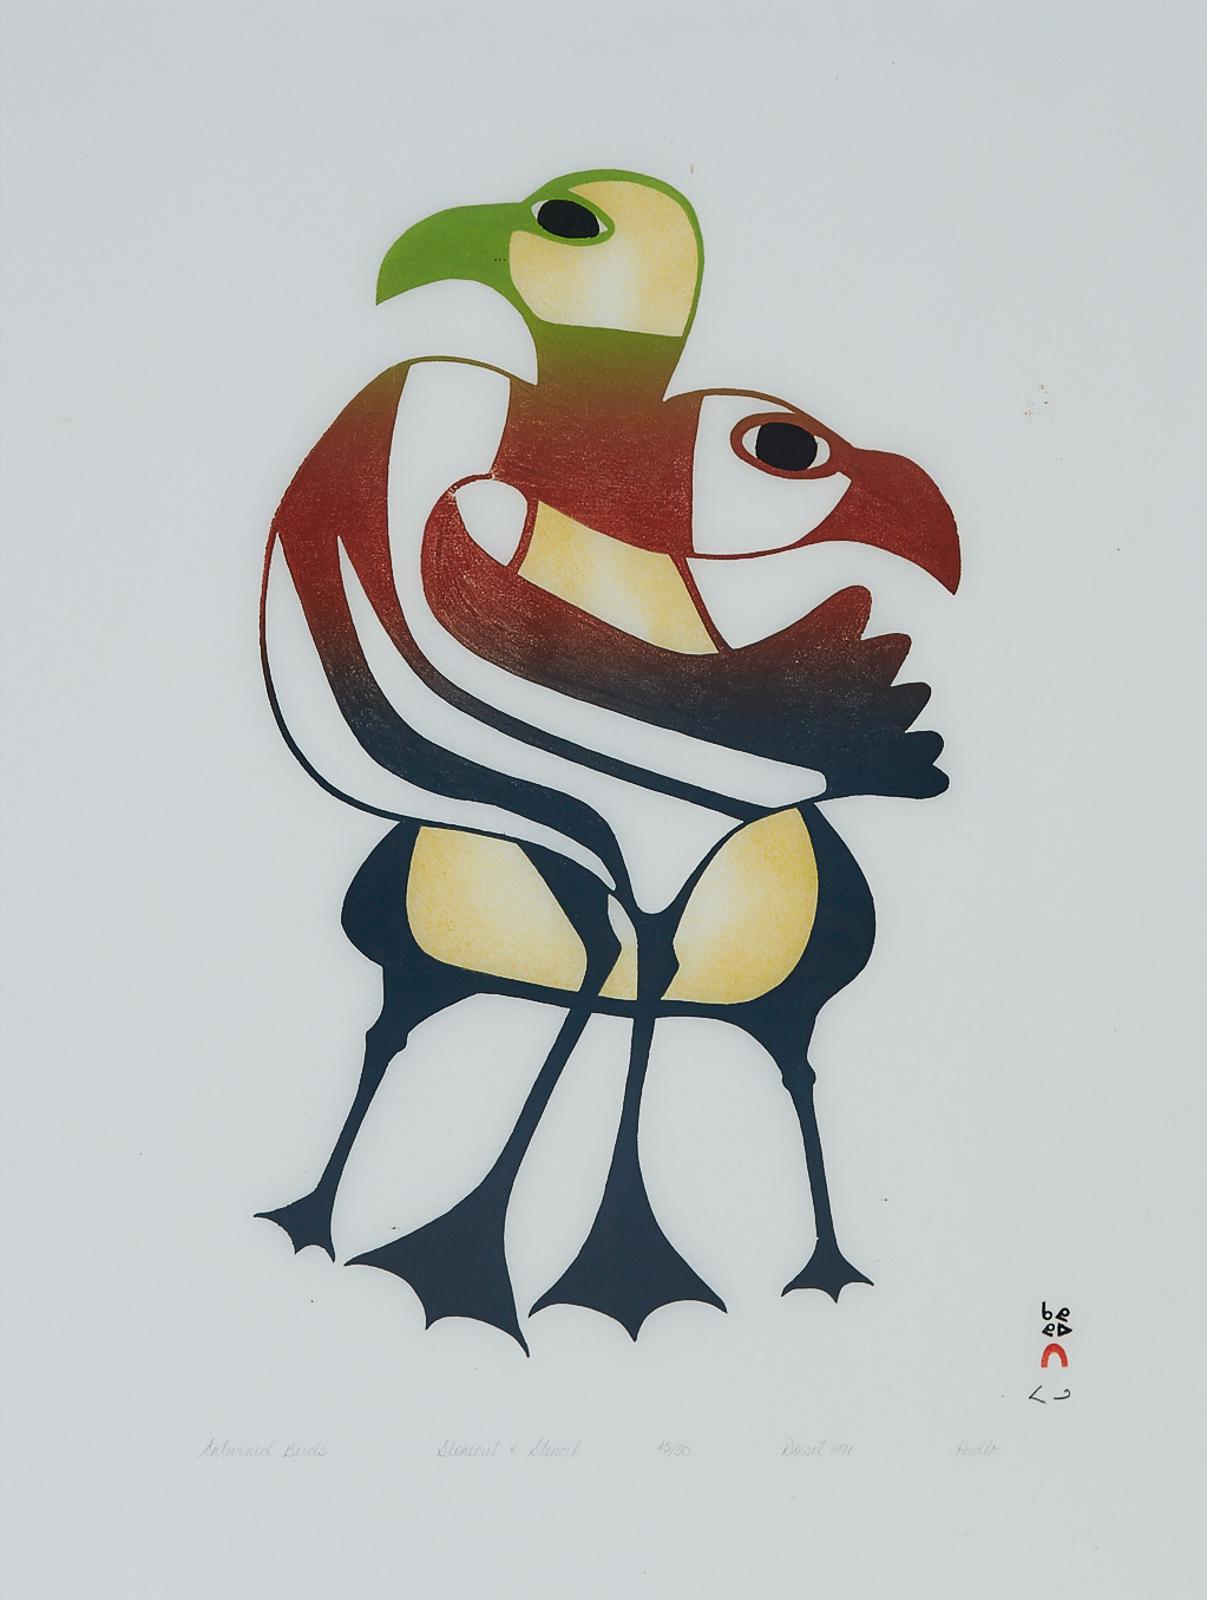 Pudlo Pudlat (1916-1992) - Entwined Birds